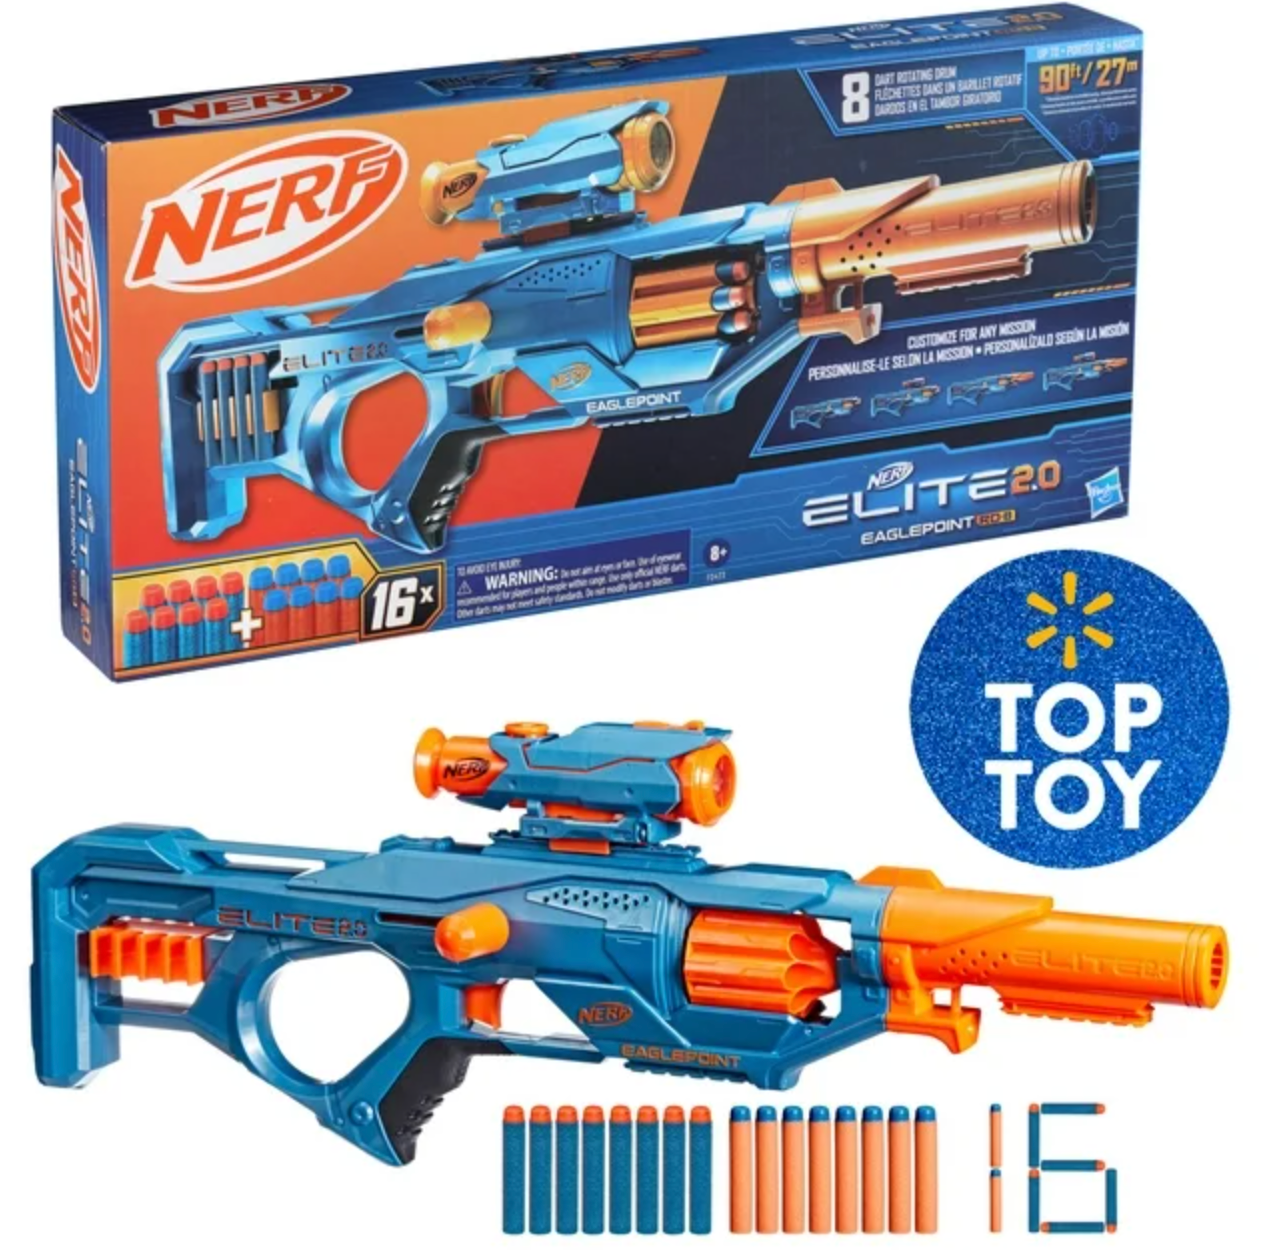 Nerf Elite 2.0 Eagle Point RD-8 Kids Toy Blaster